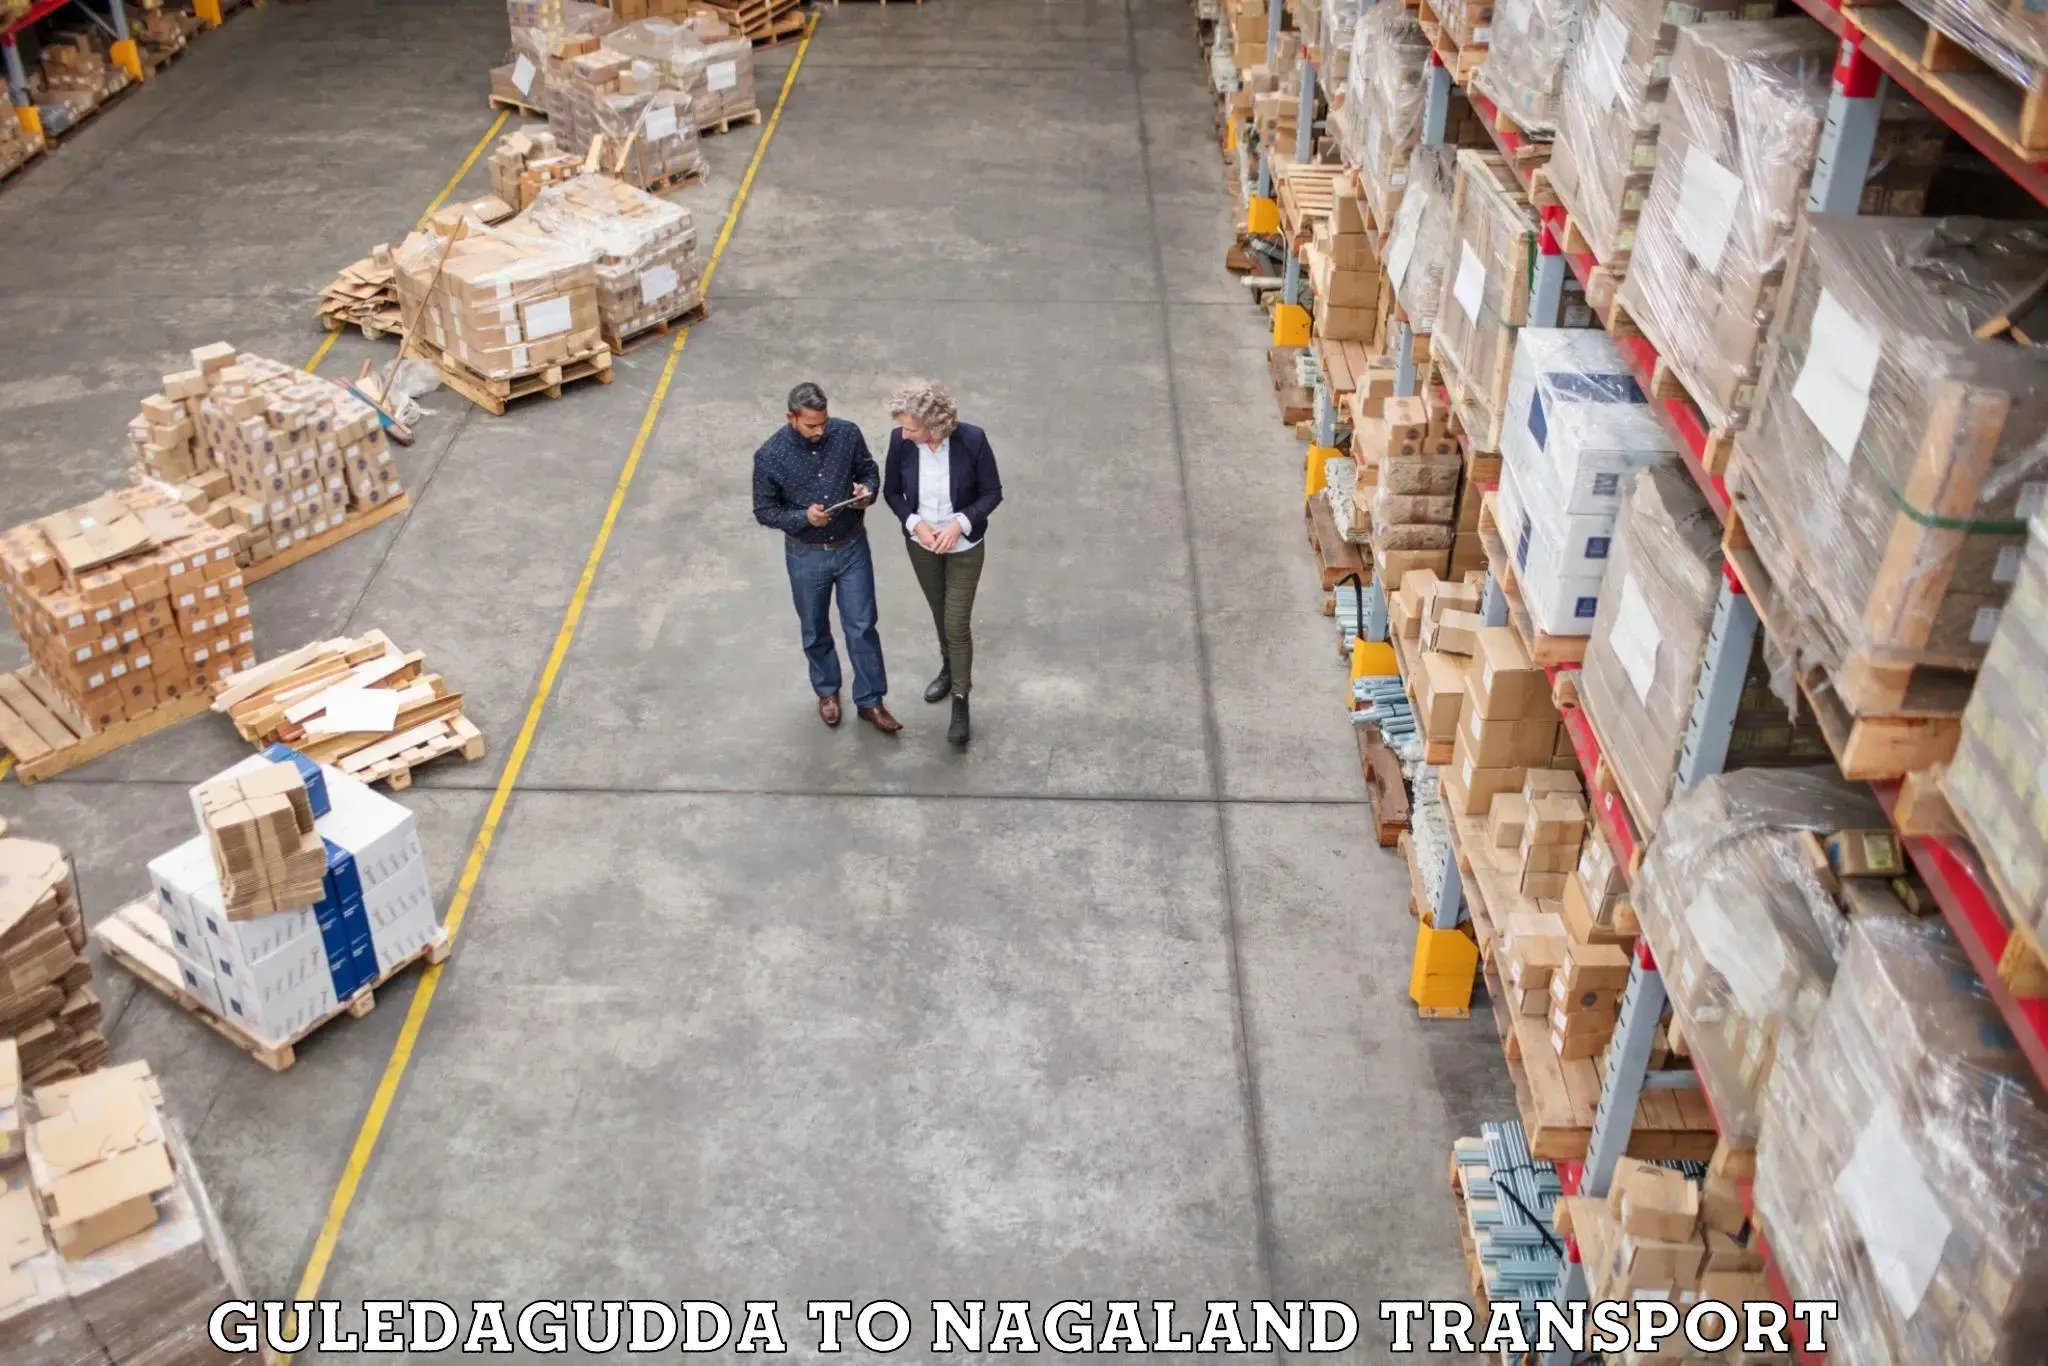 Express transport services Guledagudda to Nagaland